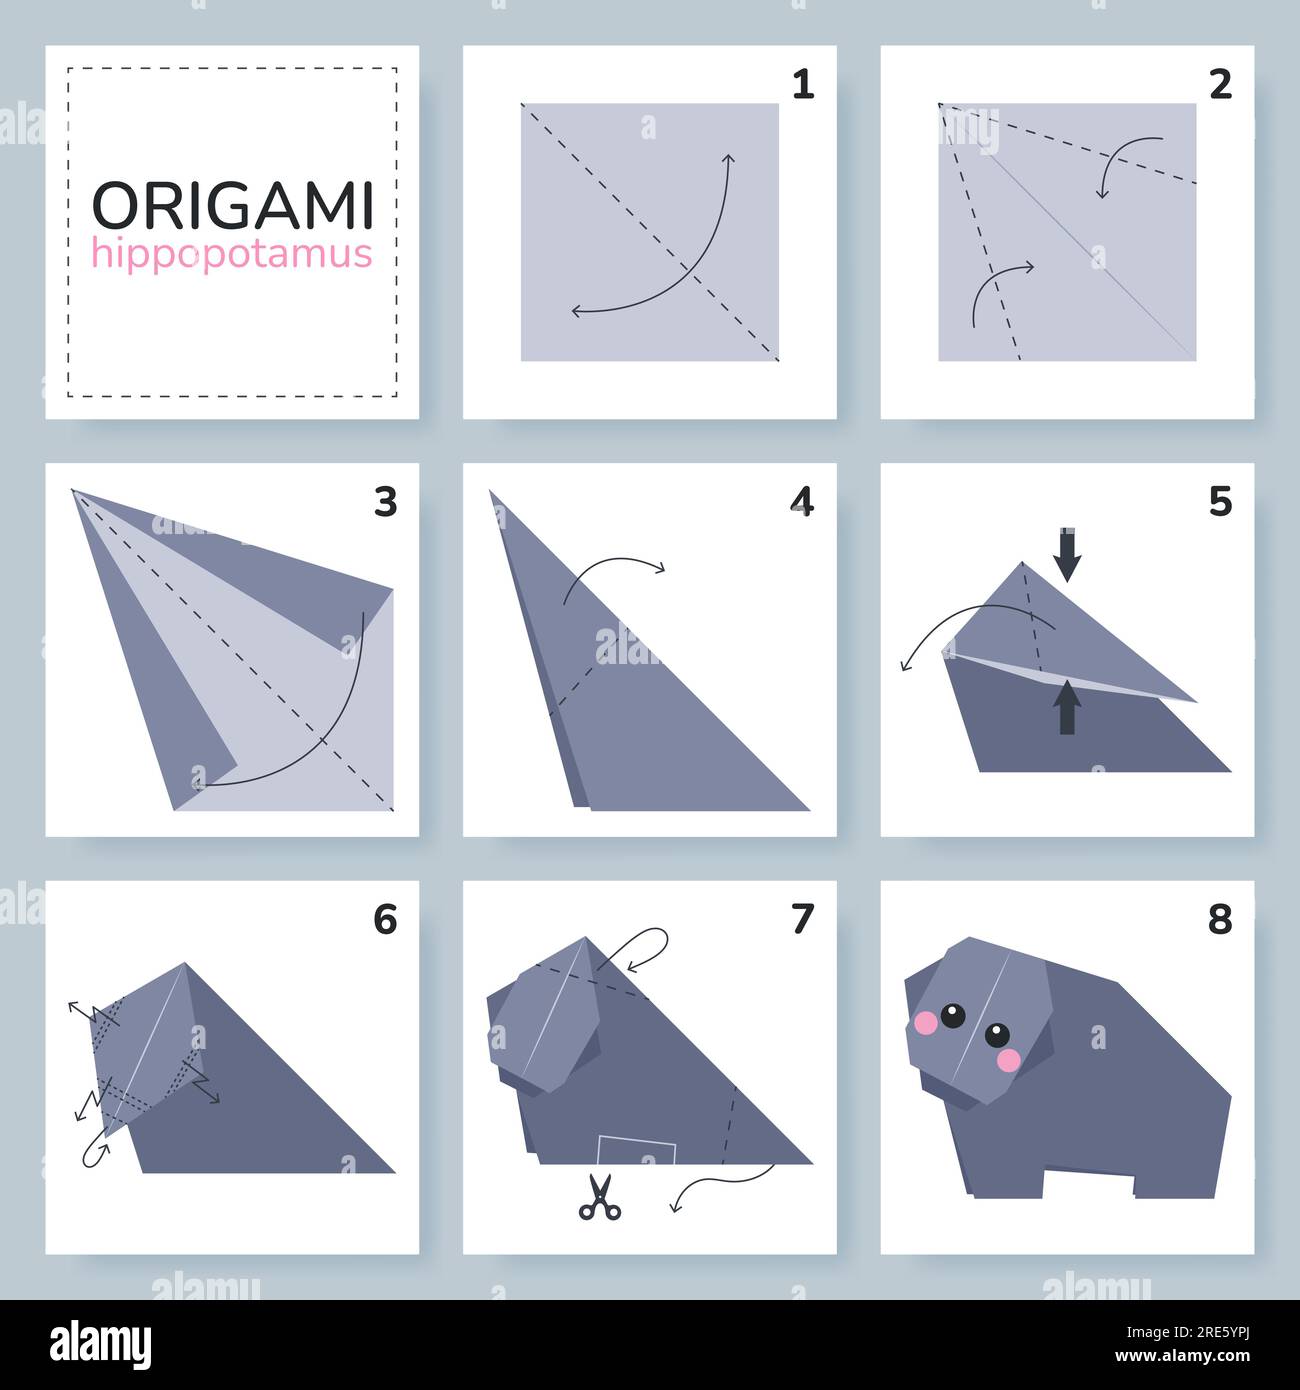 Origami tutorial for kids. Origami hippopotamus. Stock Vector